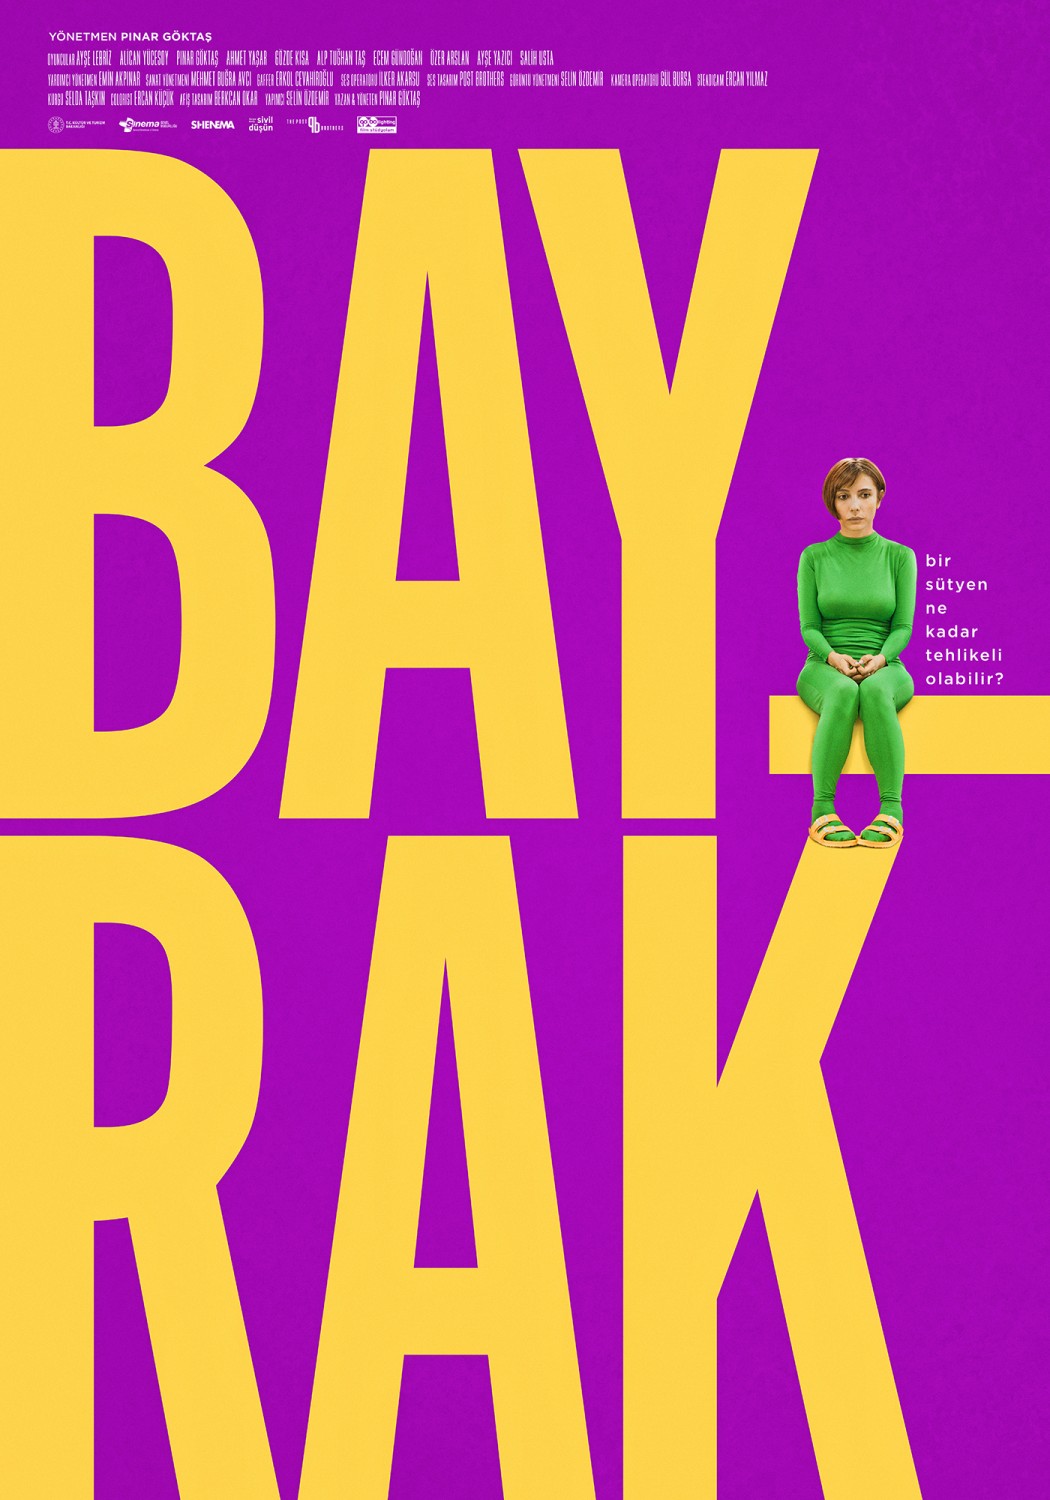 Extra Large Movie Poster Image for Bayrak